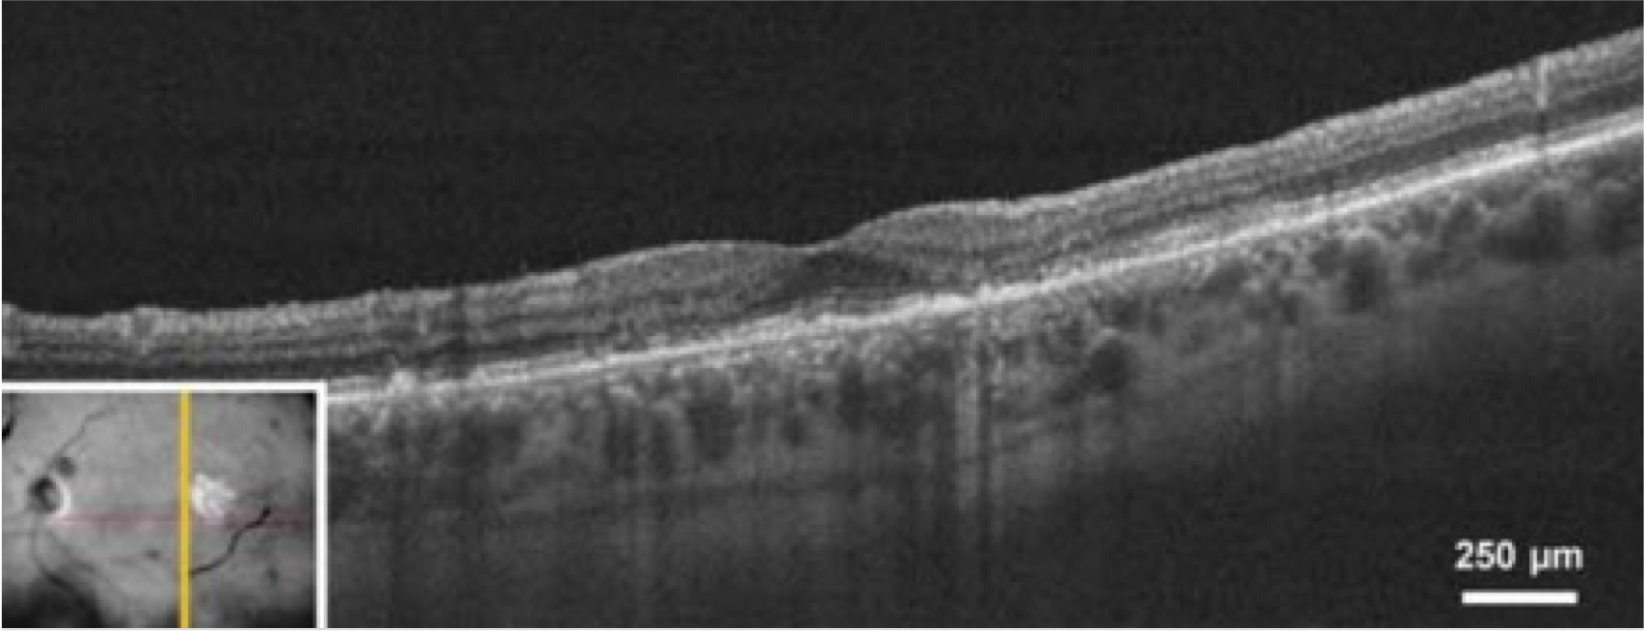 dryAMD Optical coherence tomography (OCT) image of the eye.